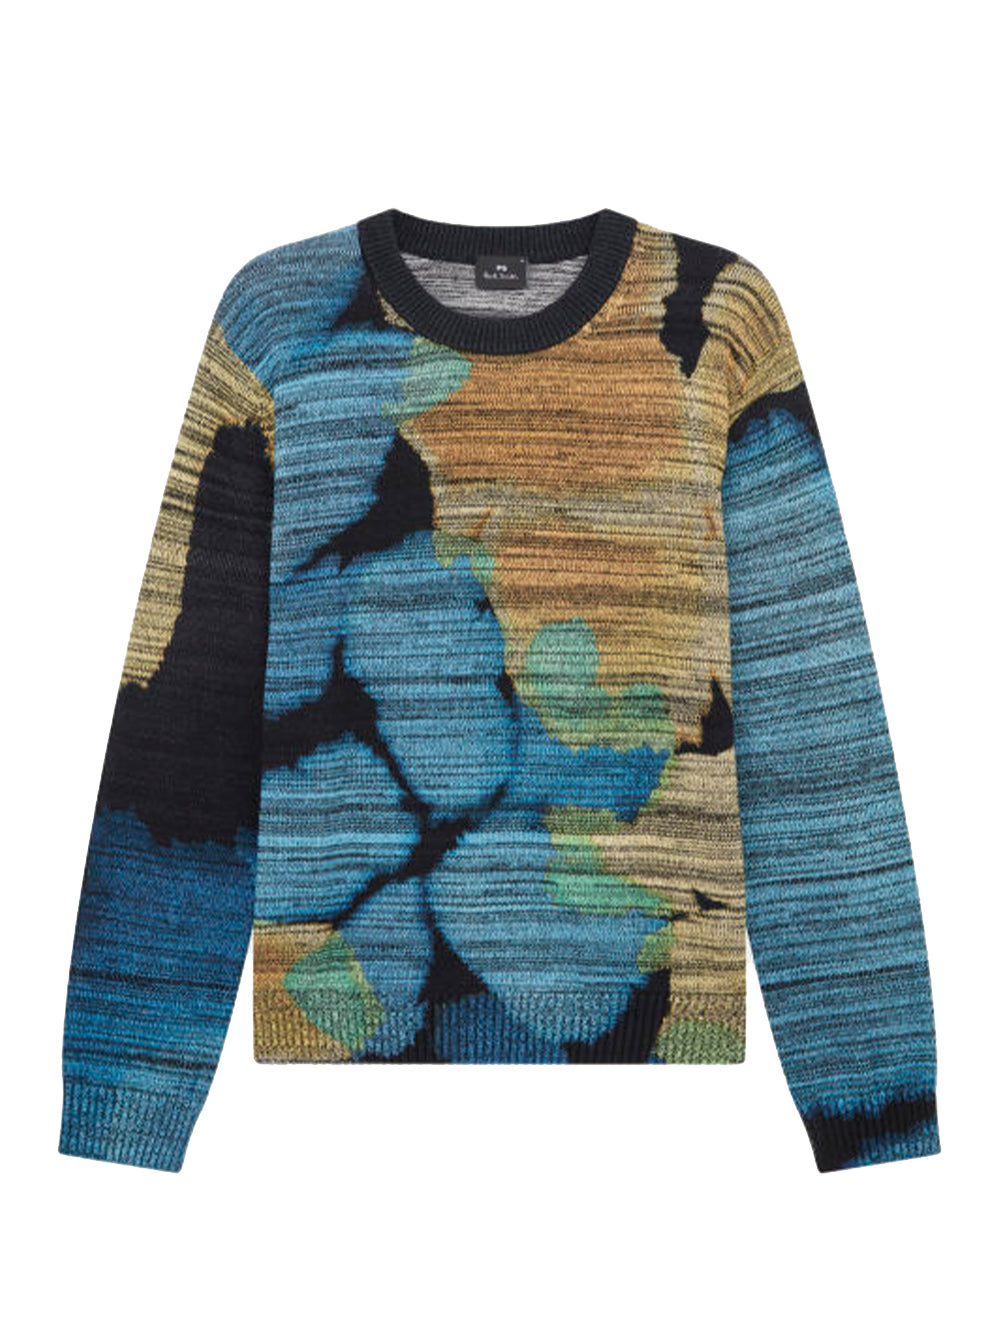 'Marsh Marigold' Cotton Sweater (Blue)